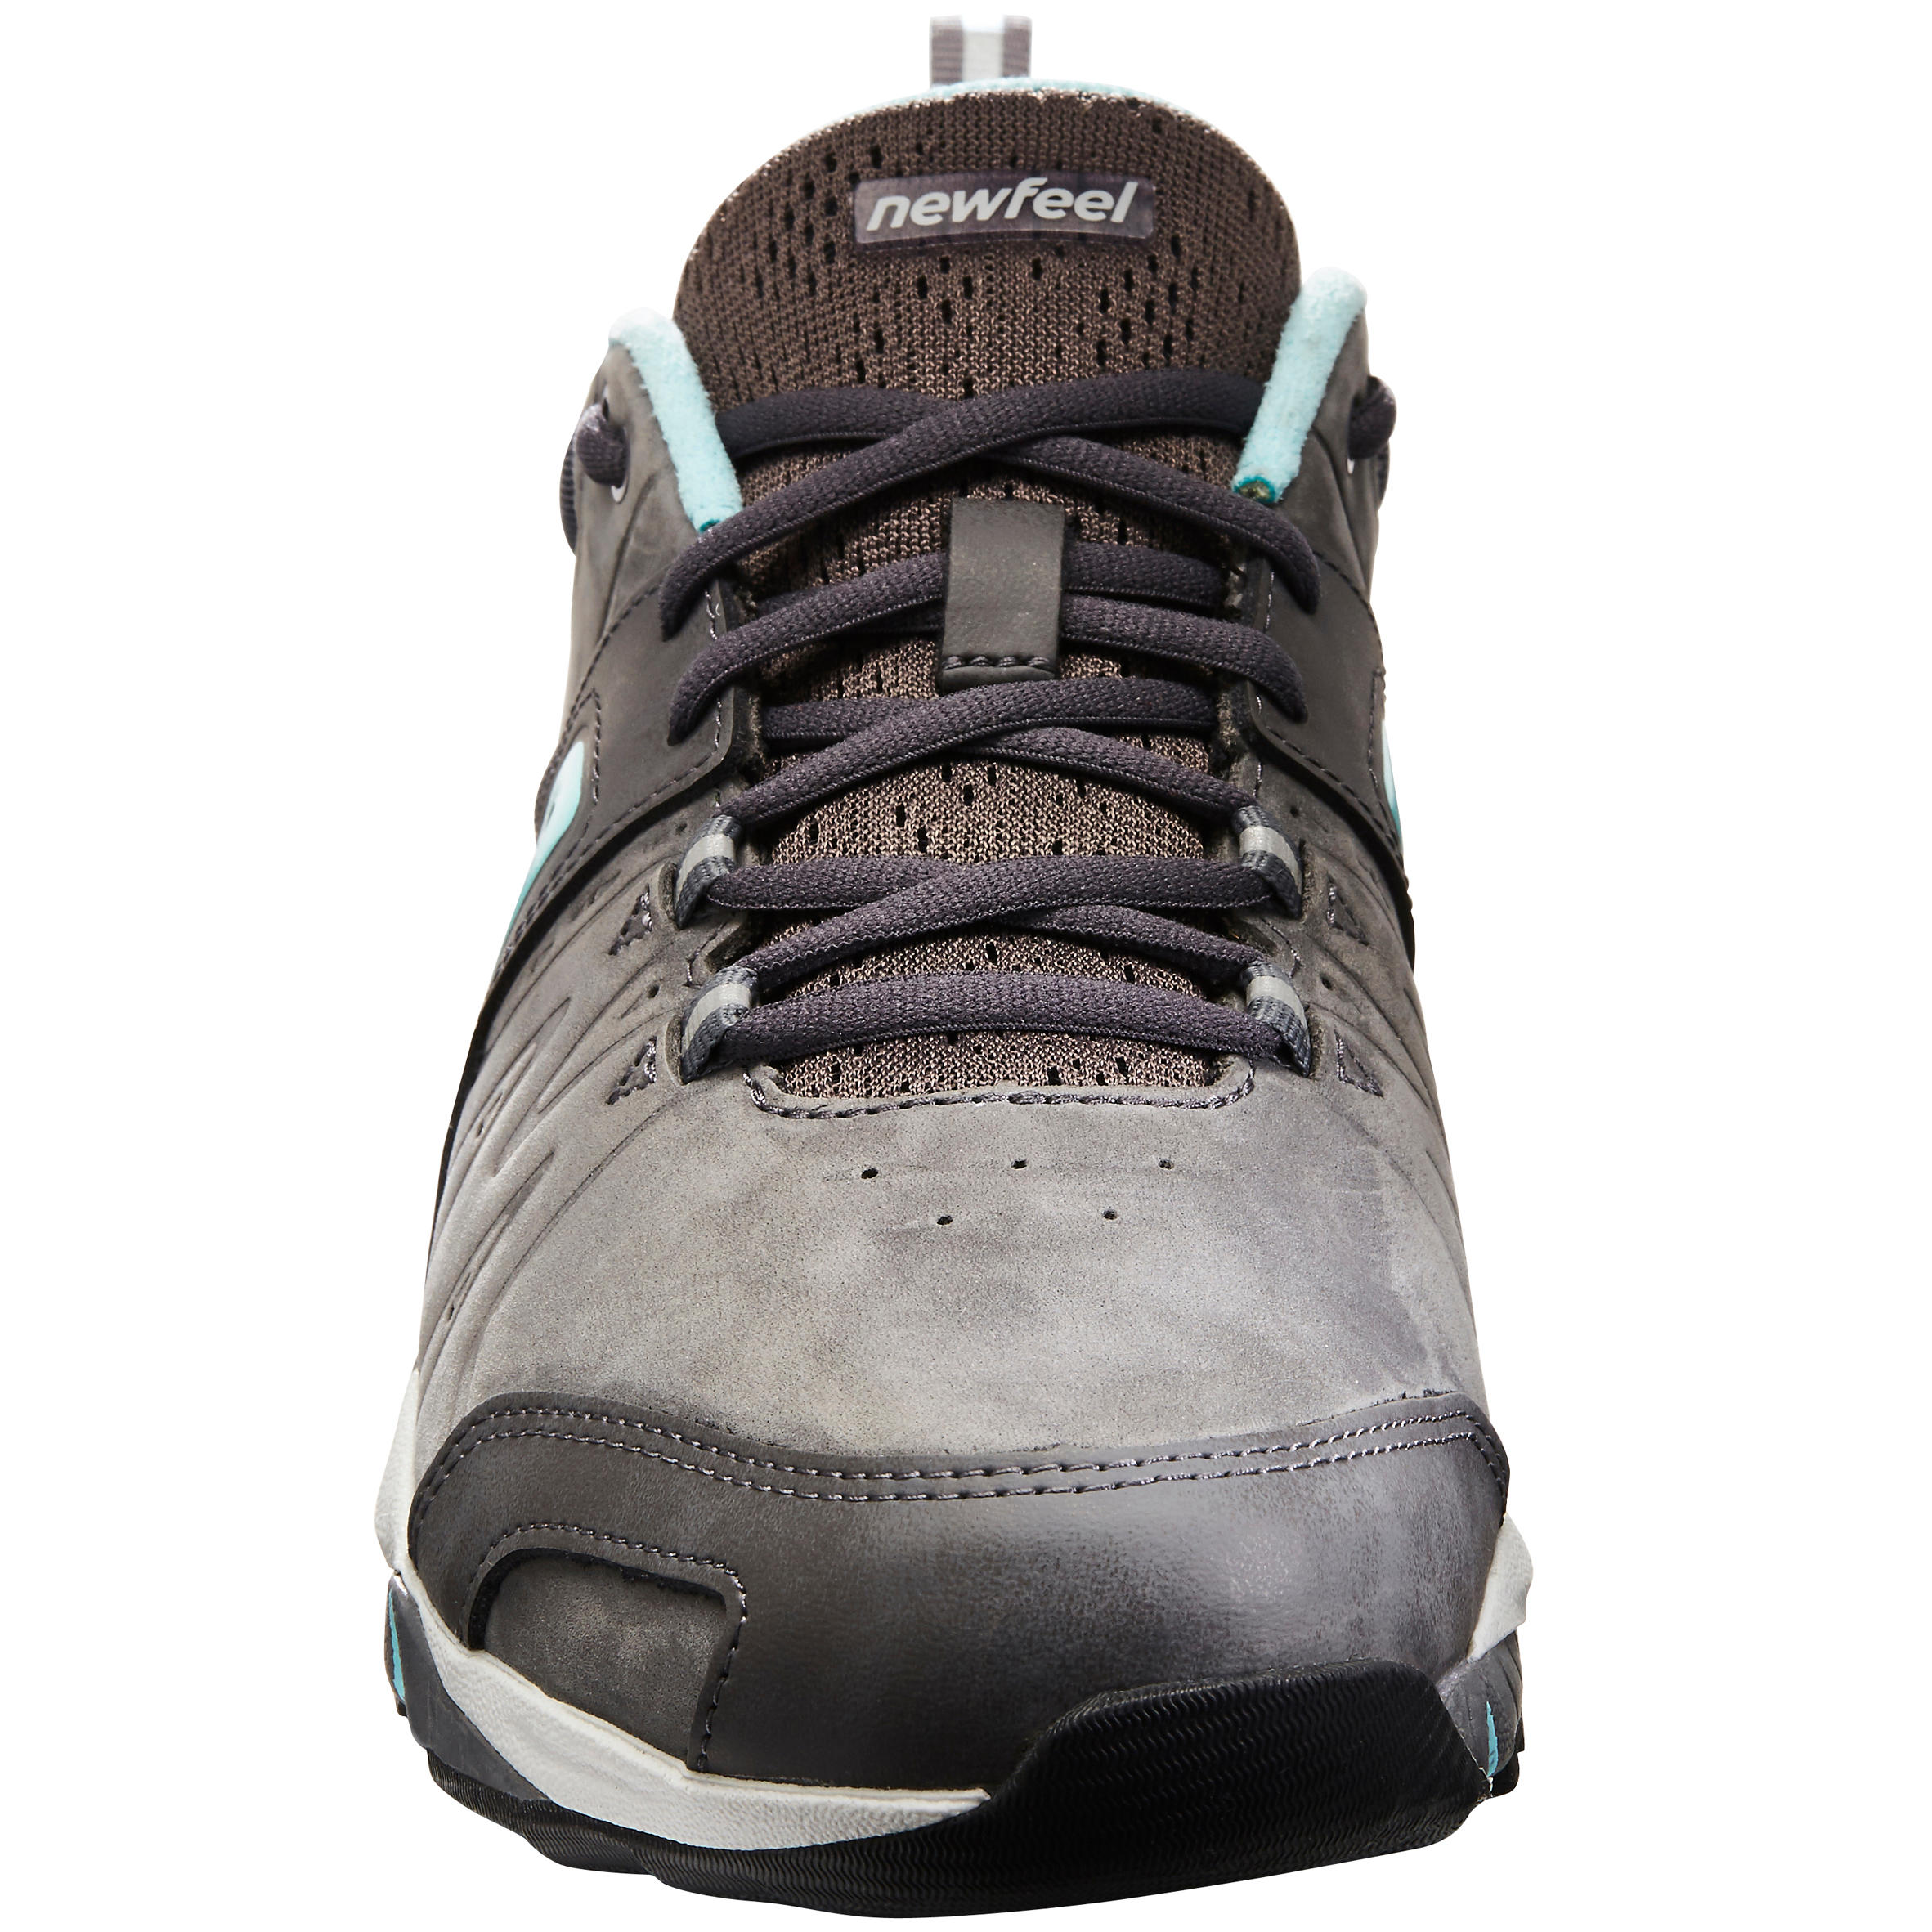 PW 940 Propulse Motion Women's Fitness Walking Shoes leather grey/blue 5/10